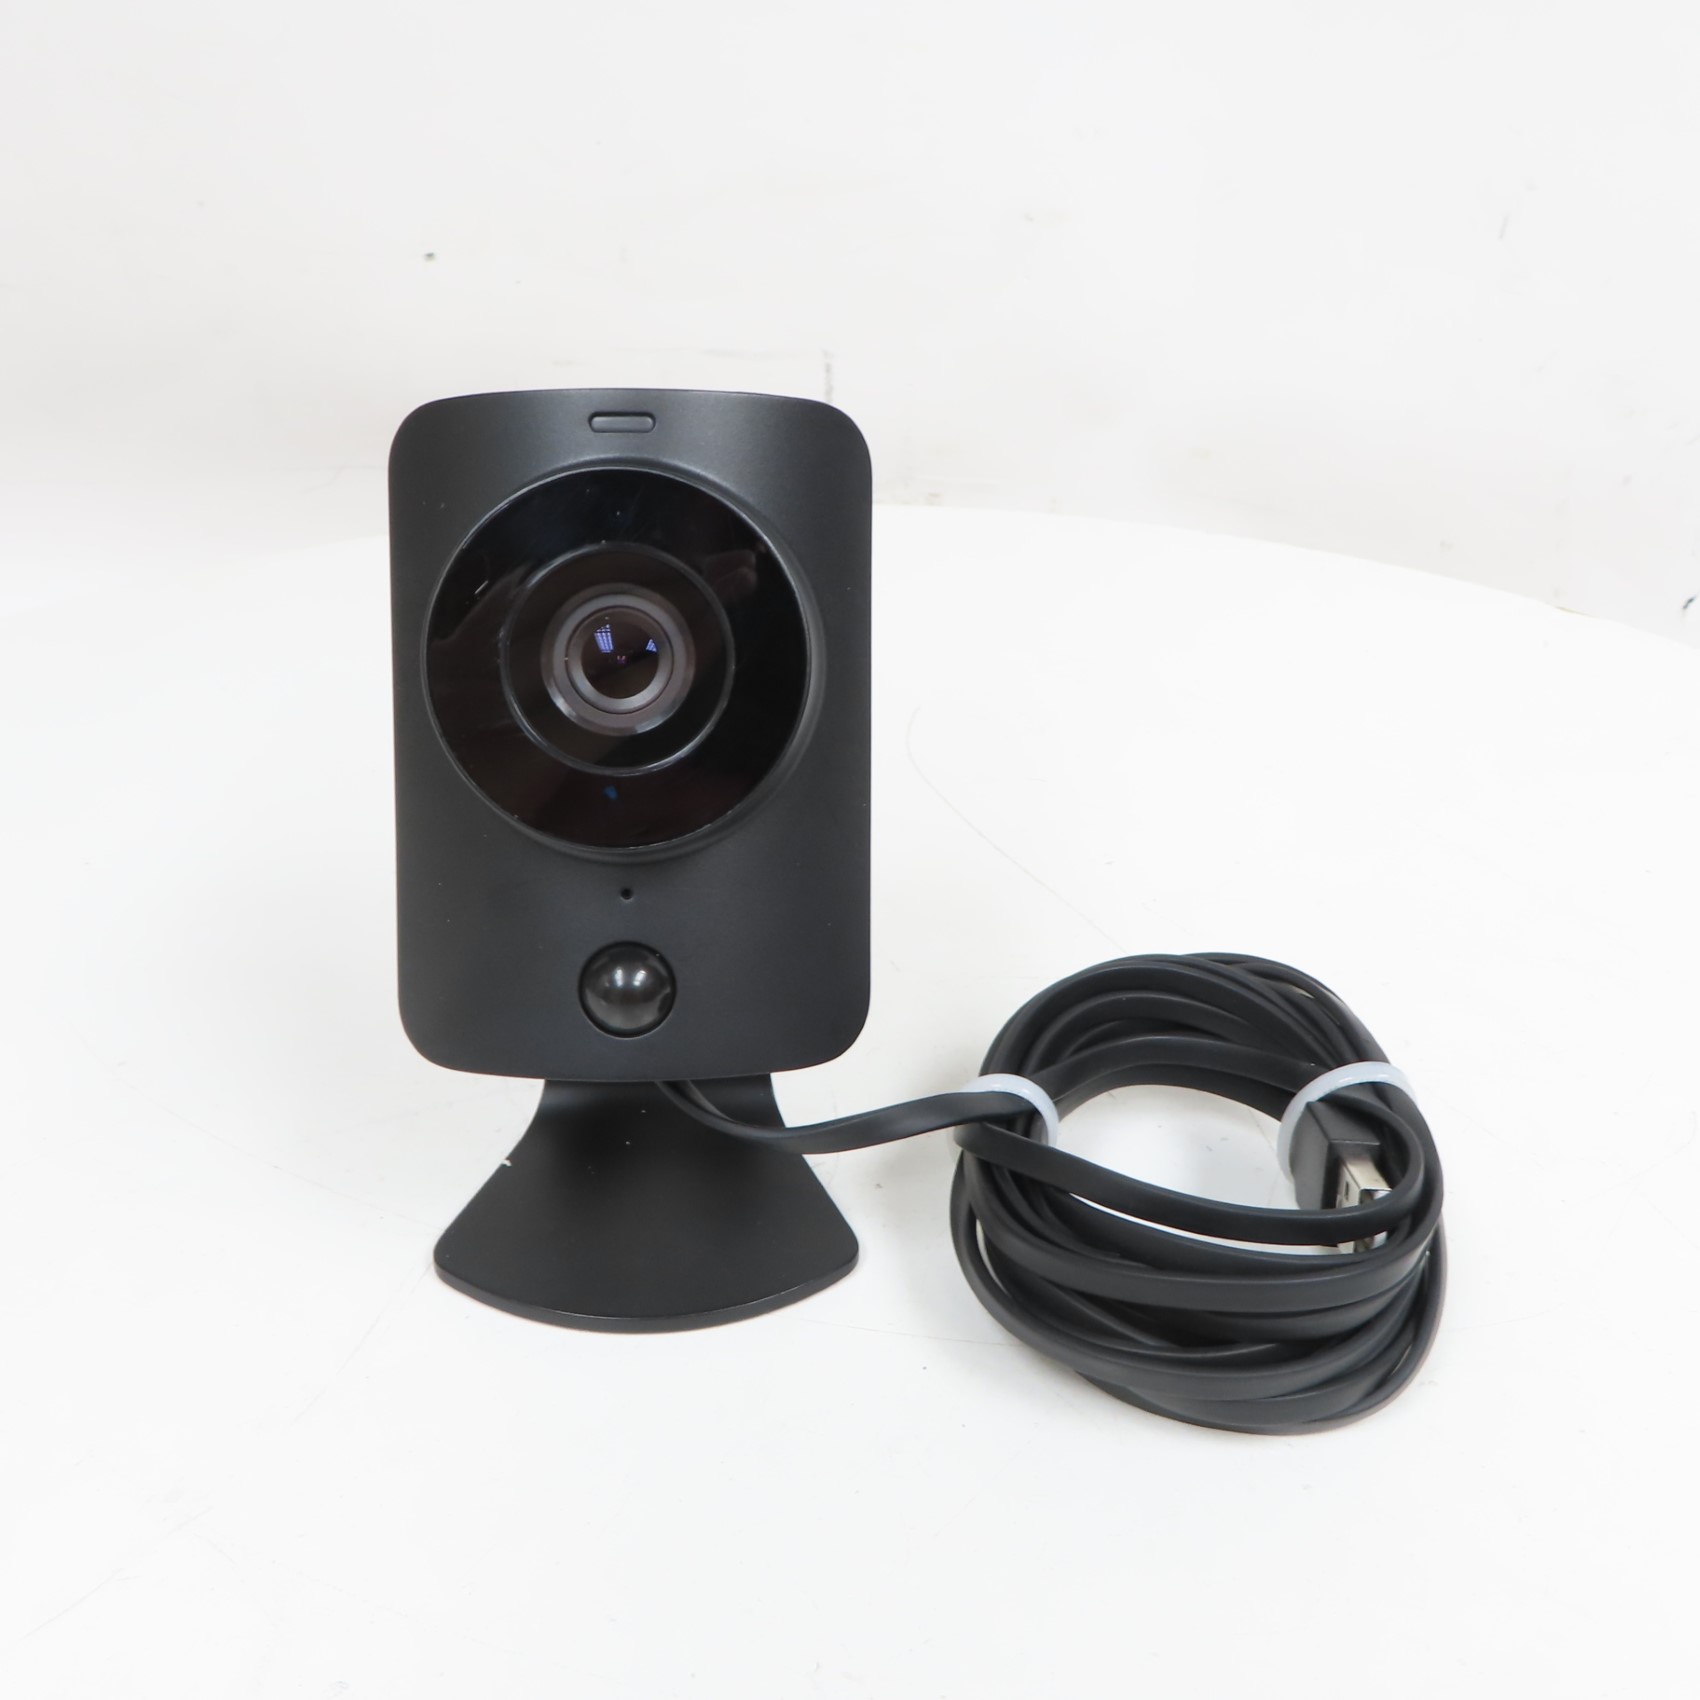 Simplisafe Camera Model Sscm1  : Enhance Your Security